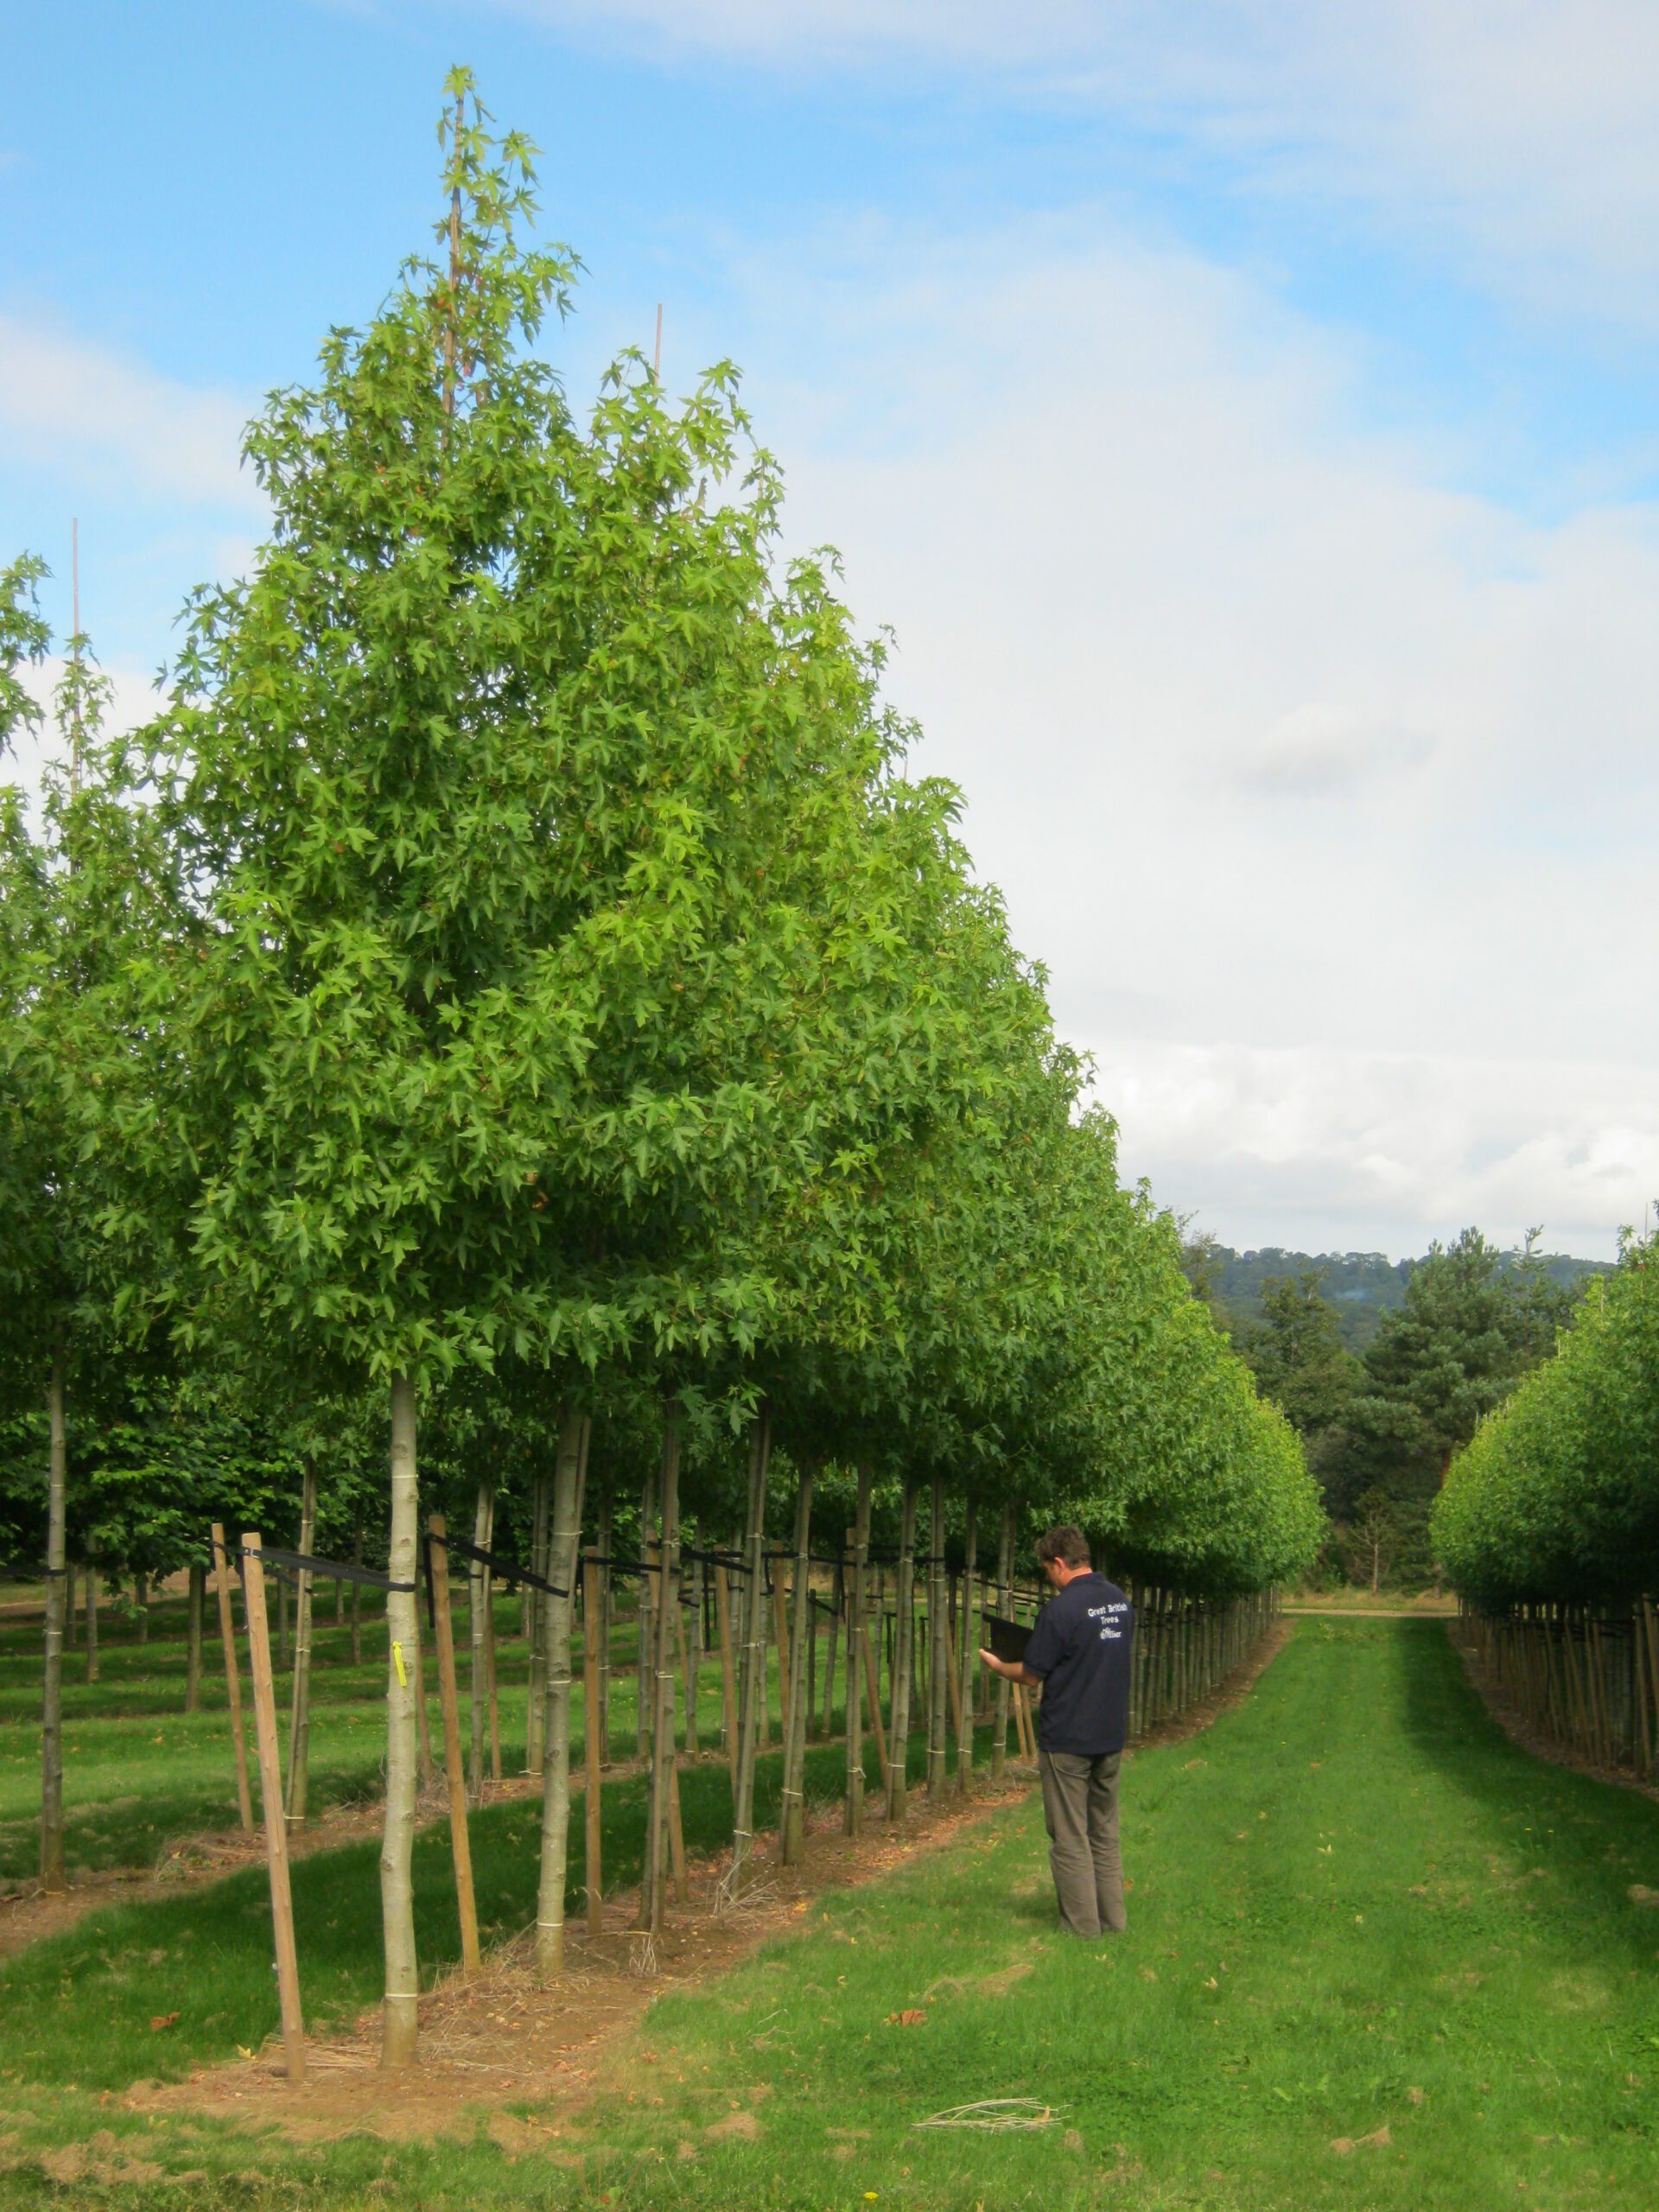 Liquidambar Worplesdon trees growing in field